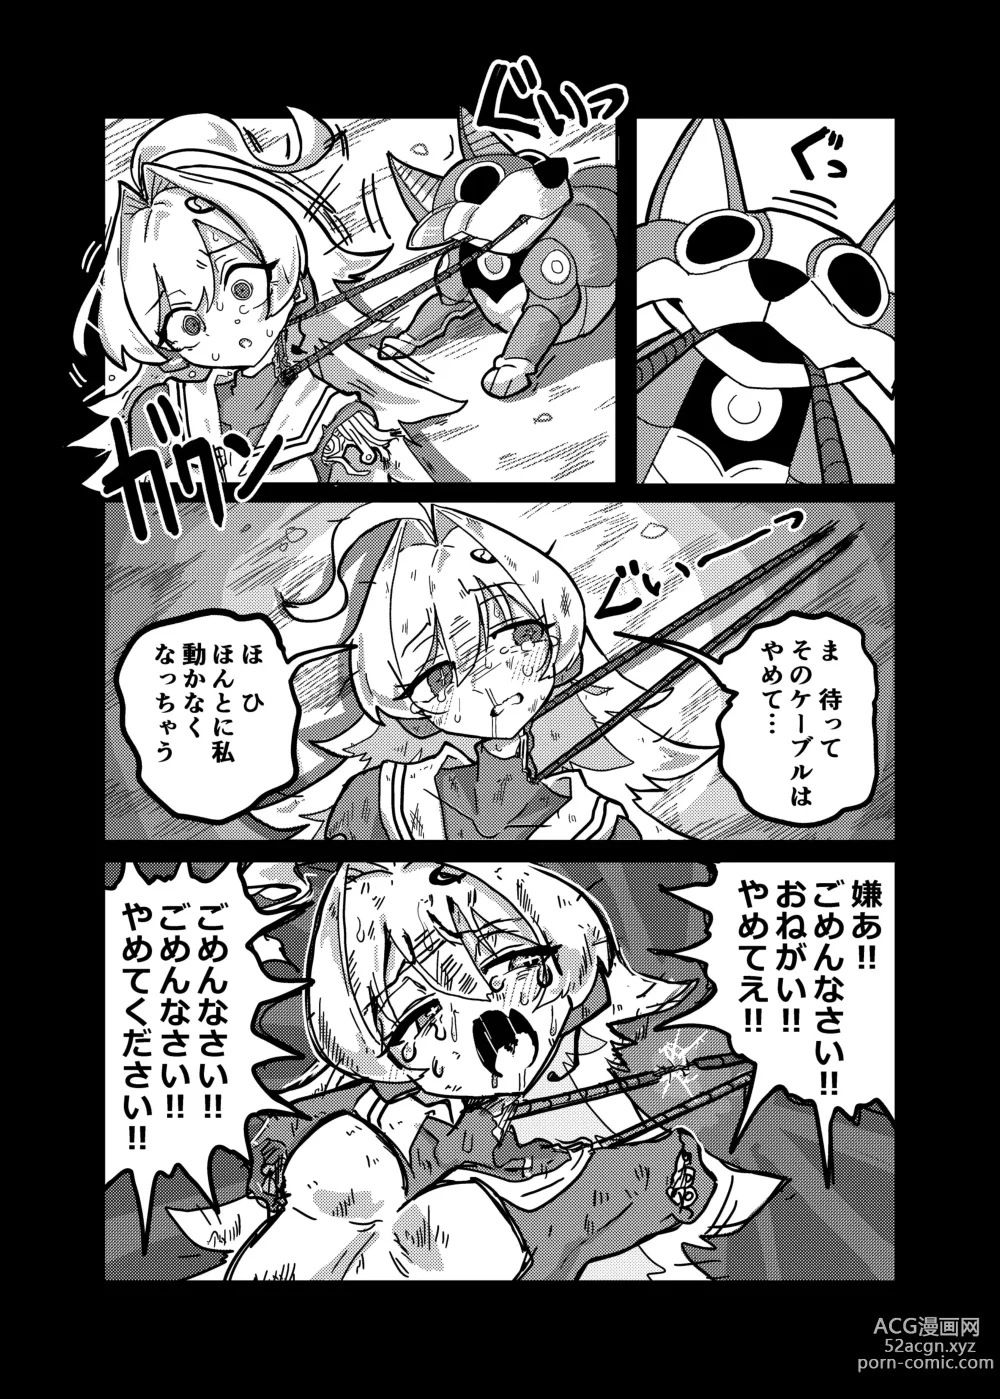 Page 23 of doujinshi Ralmia vs Robopup